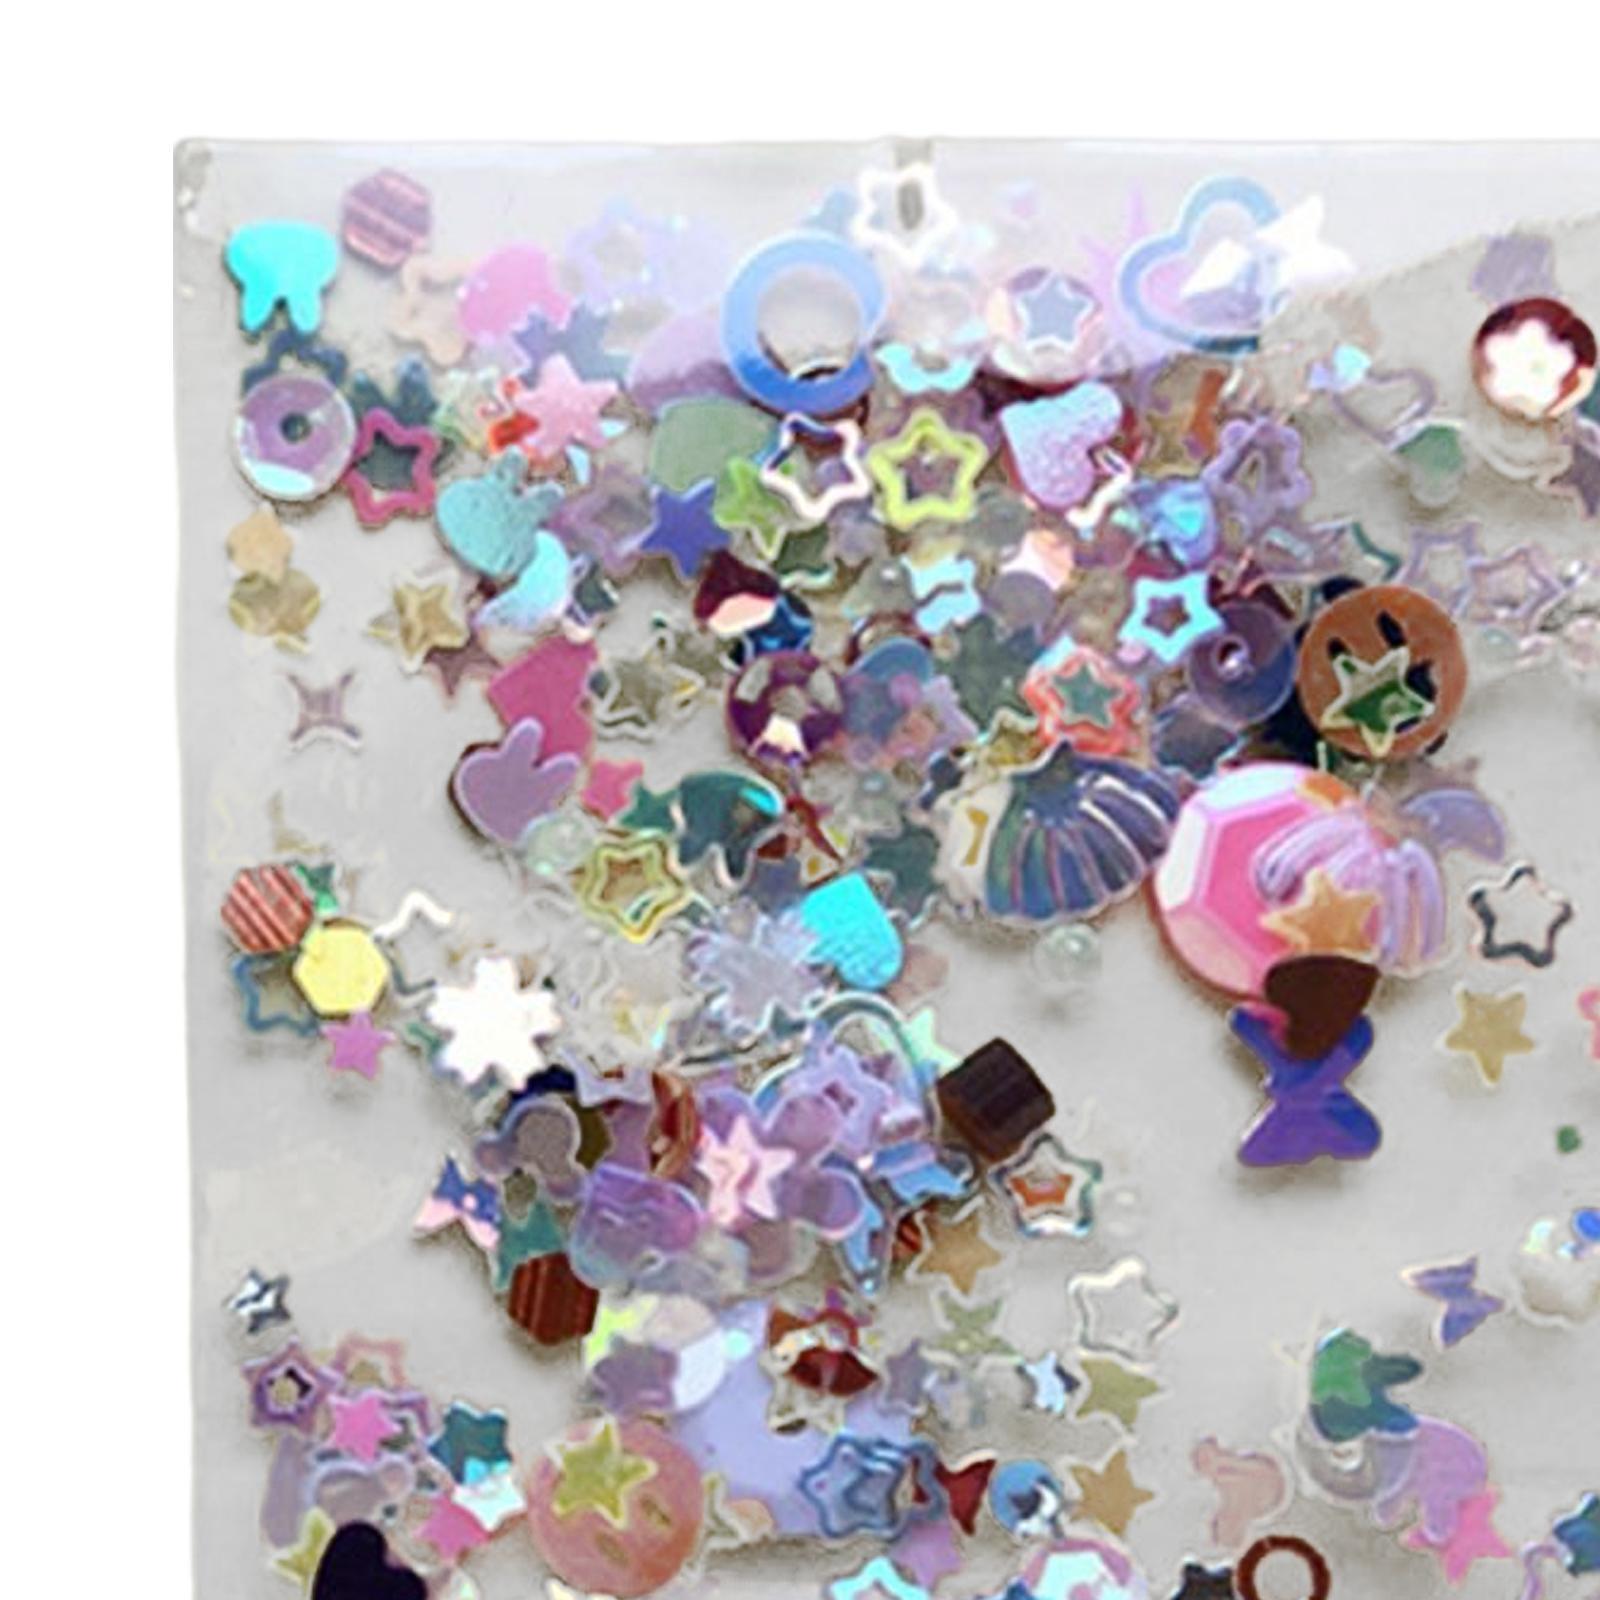 Multicolor Manicure Glitter Confetti Sequin Shimmer Ornament Star Scatter Table Confetti for Festival Party Decoration Craft Making Nail Art